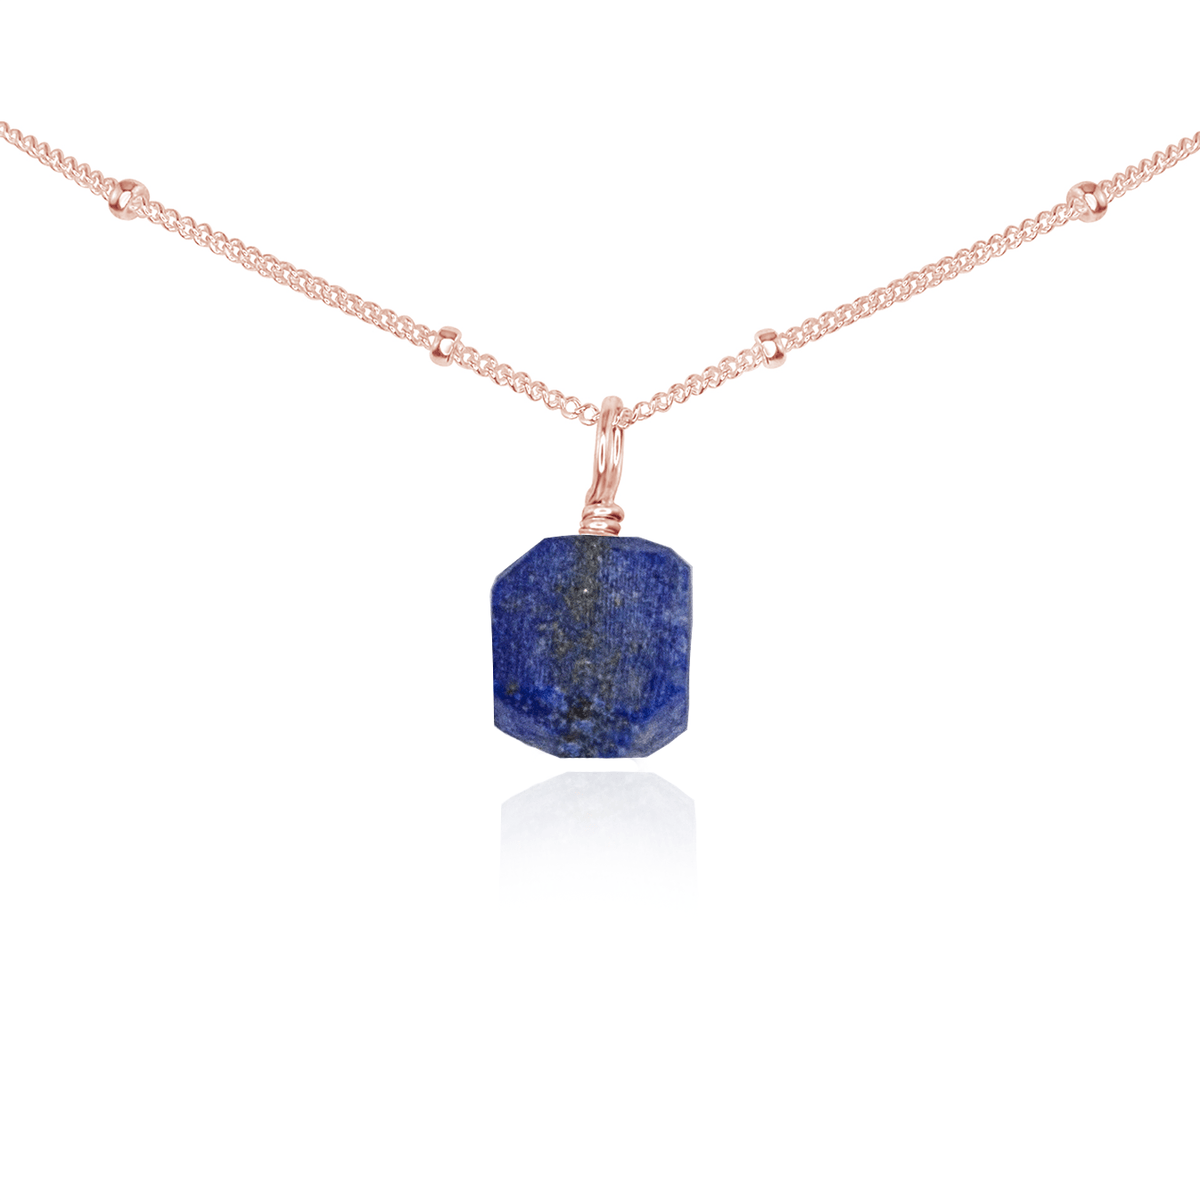 Tiny Rough Lapis Lazuli Gemstone Pendant Choker - Tiny Rough Lapis Lazuli Gemstone Pendant Choker - 14k Rose Gold Fill / Satellite - Luna Tide Handmade Crystal Jewellery